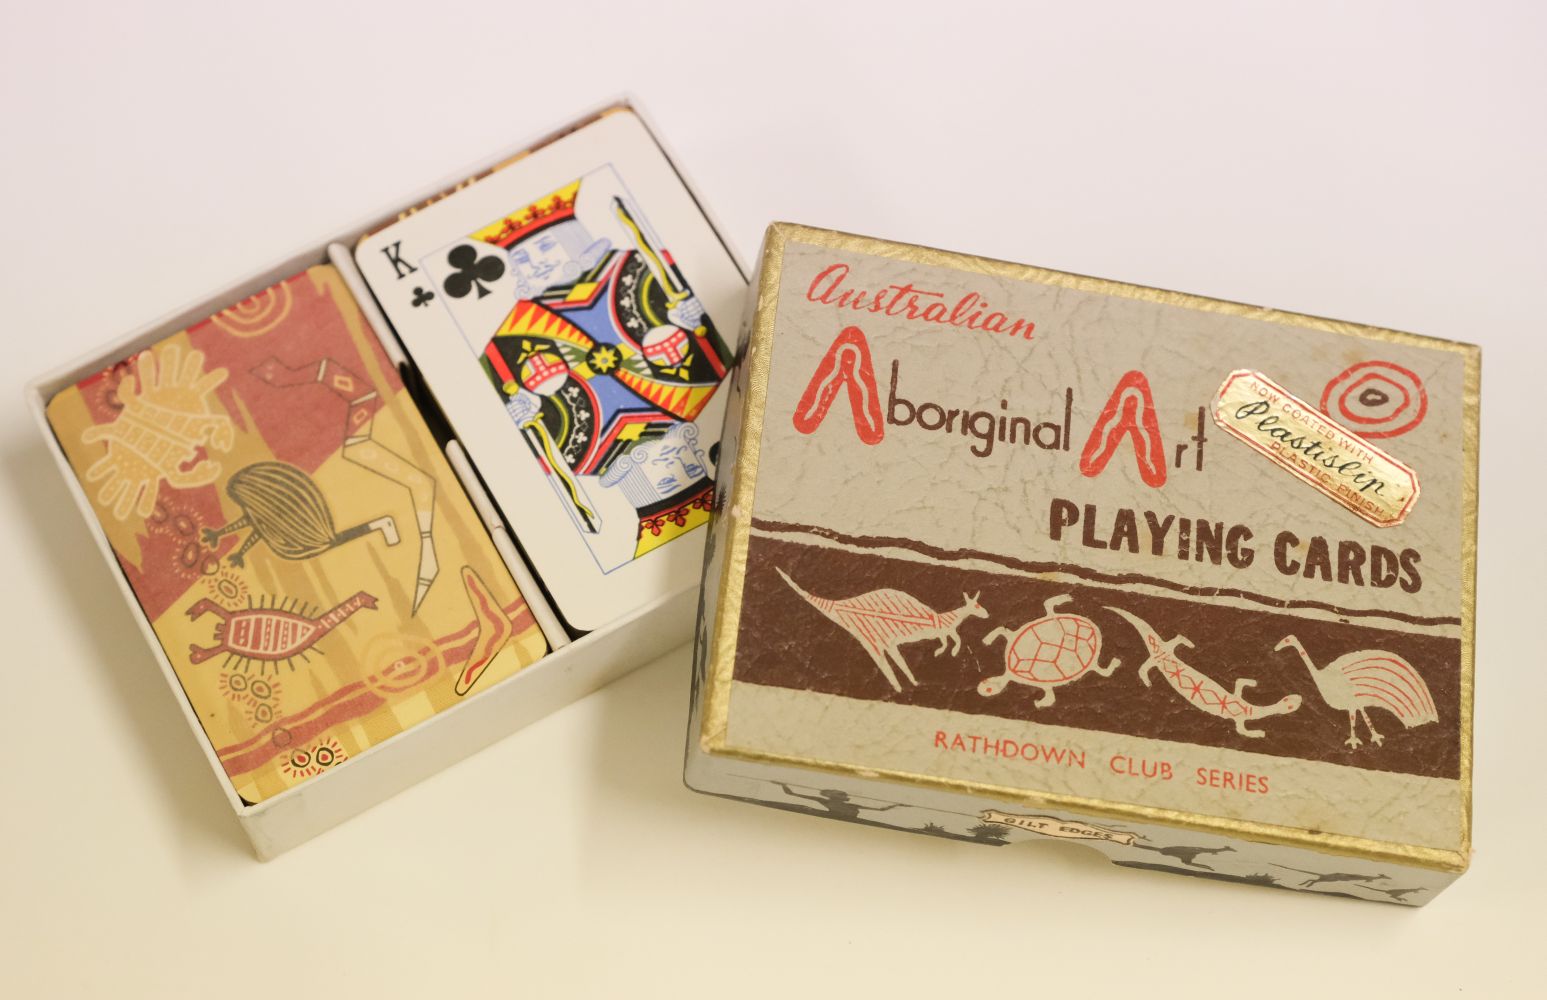 Australian Playing Cards. Kangaroo Playing Cards, circa 1900 - Image 4 of 9